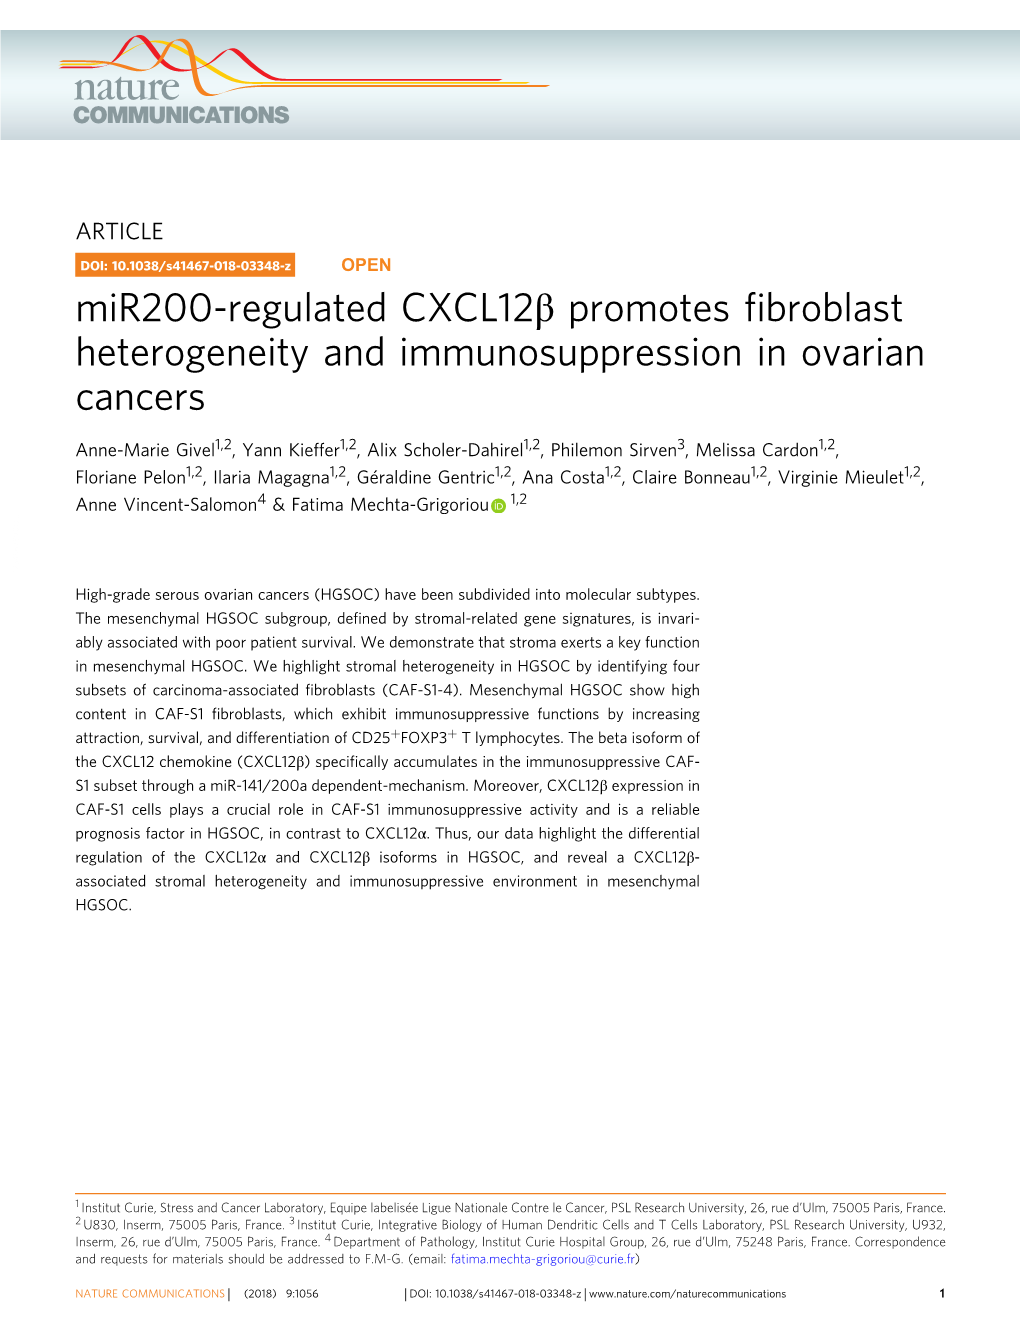 Mir200-Regulated CXCL12Î² Promotes Fibroblast Heterogeneity